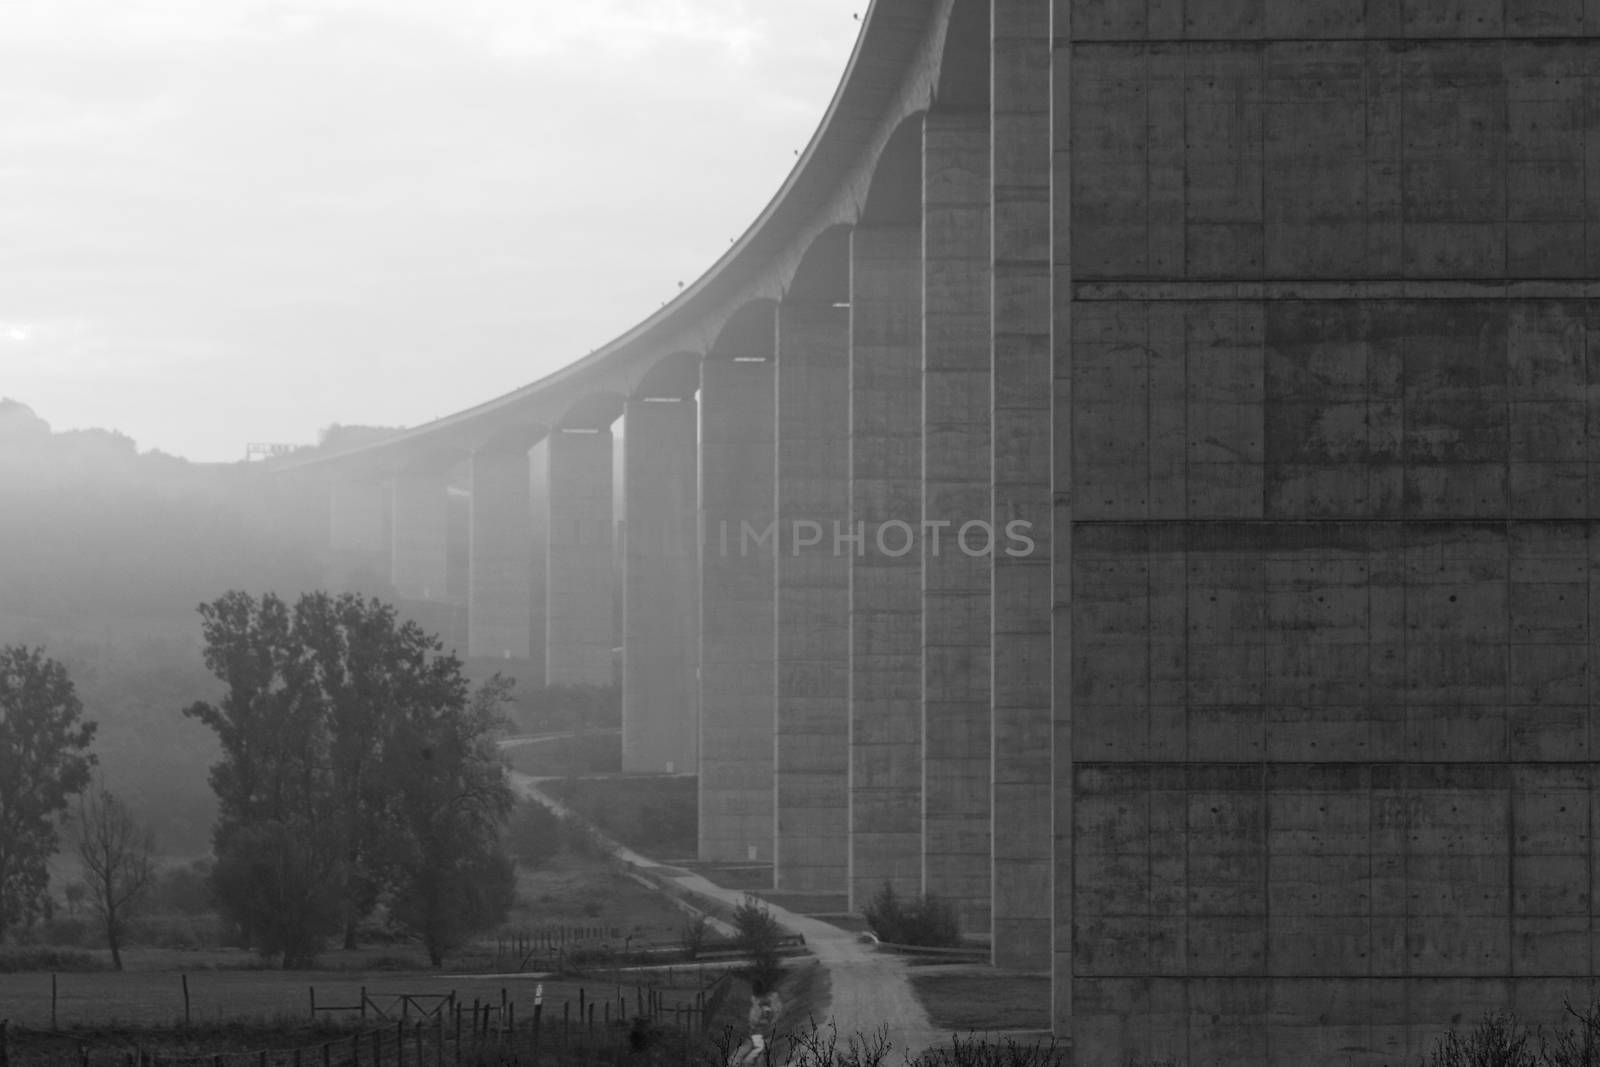 Large highway viaduct with foggy sunrise on autumn